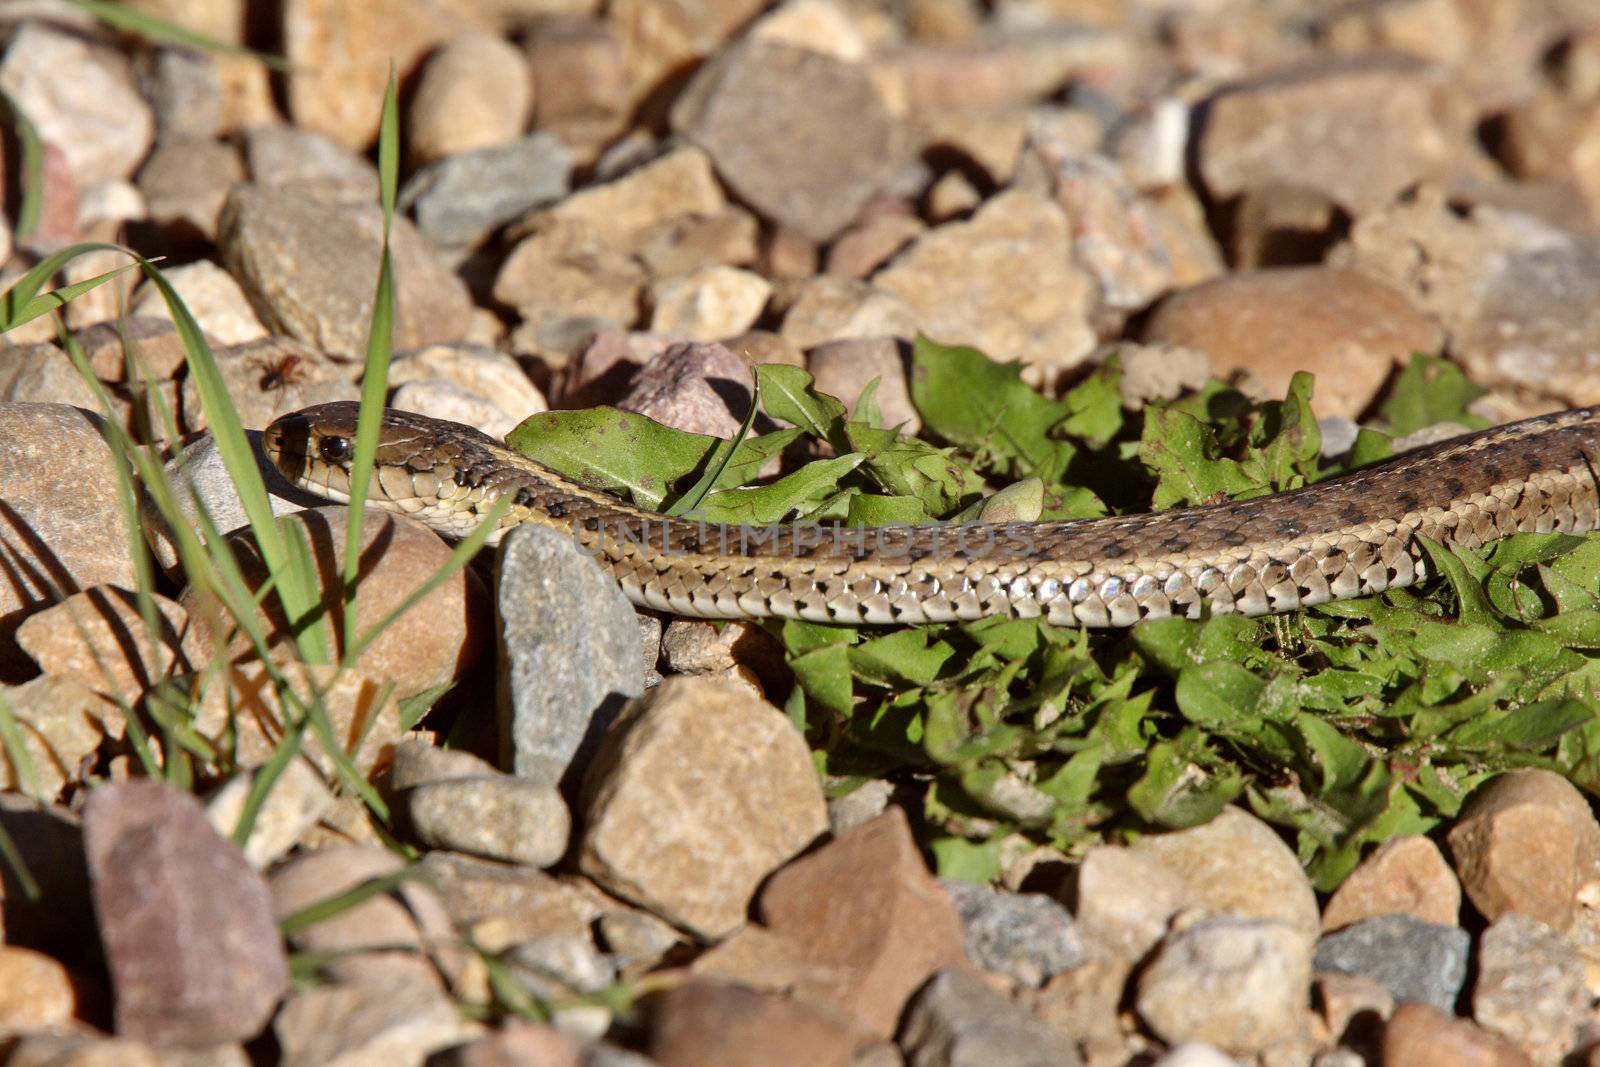 Gopher Snake amongst rocks by pictureguy